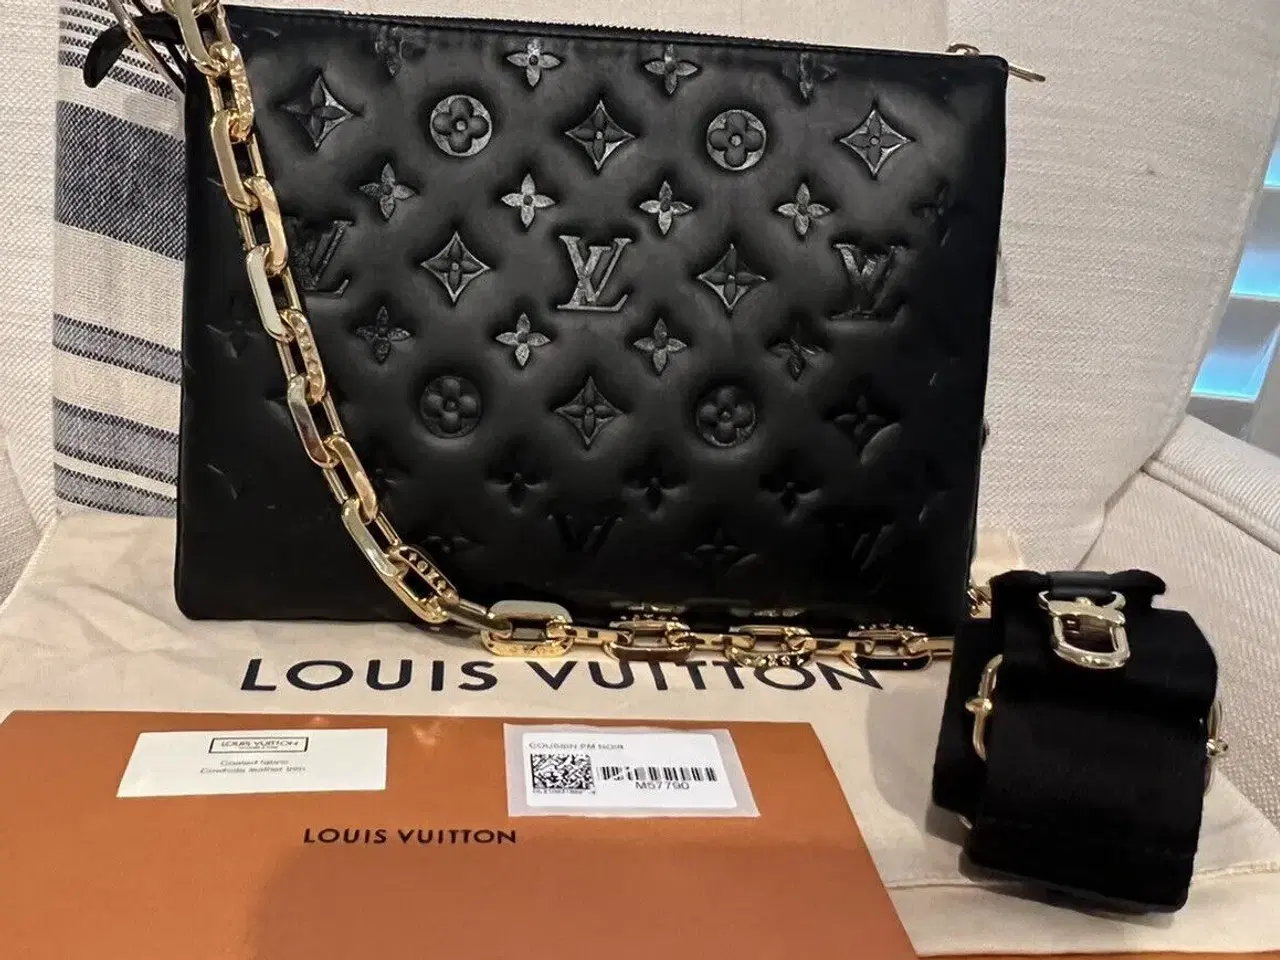 Billede 1 - Louis Vuitton Cousin Watch Sort læder håndtaske